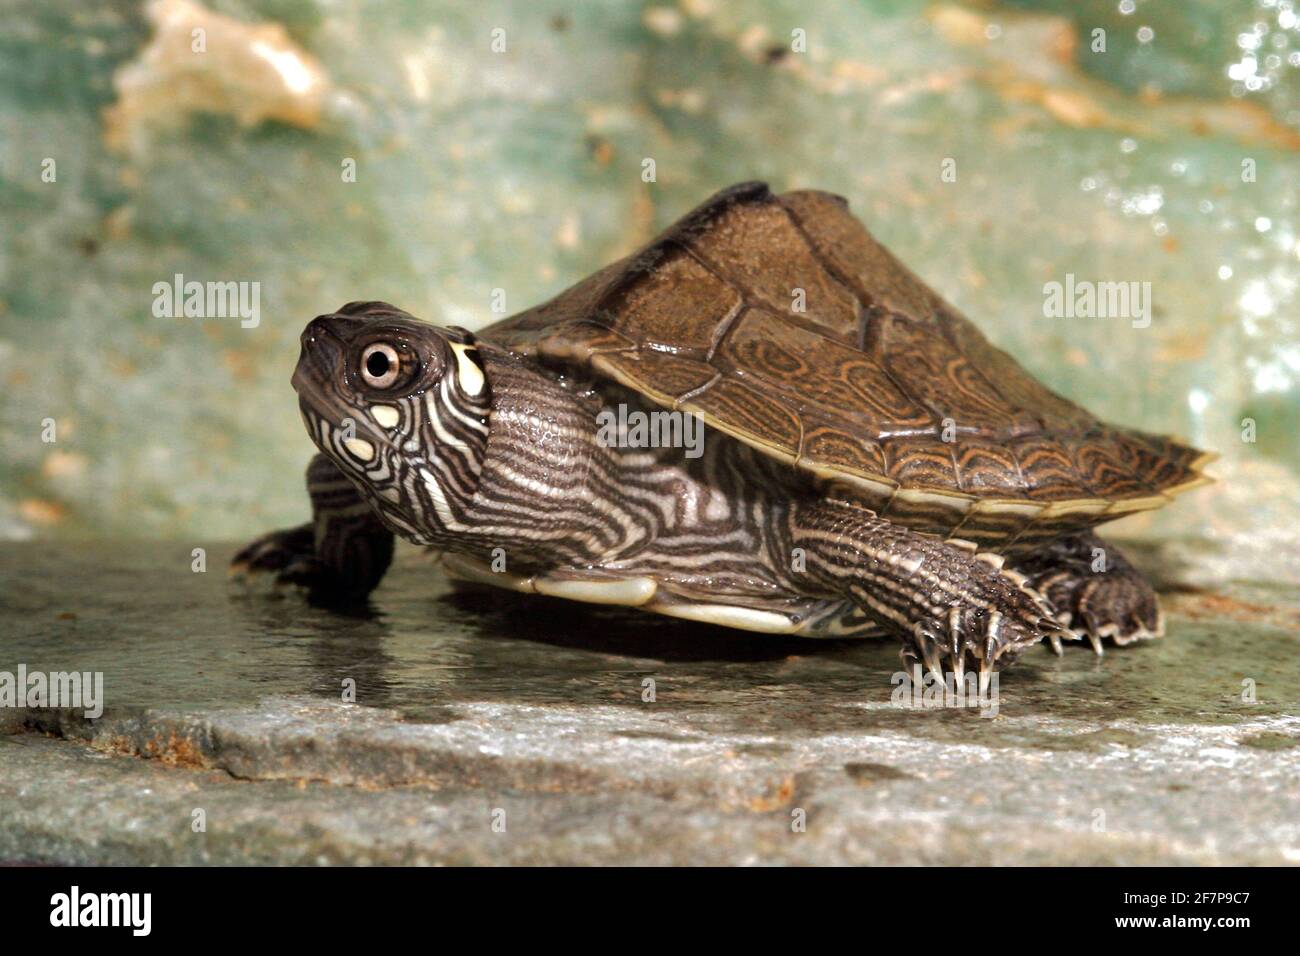 Mississippi map turtle (Graptemys kohnii), in a terrarium Stock Photo